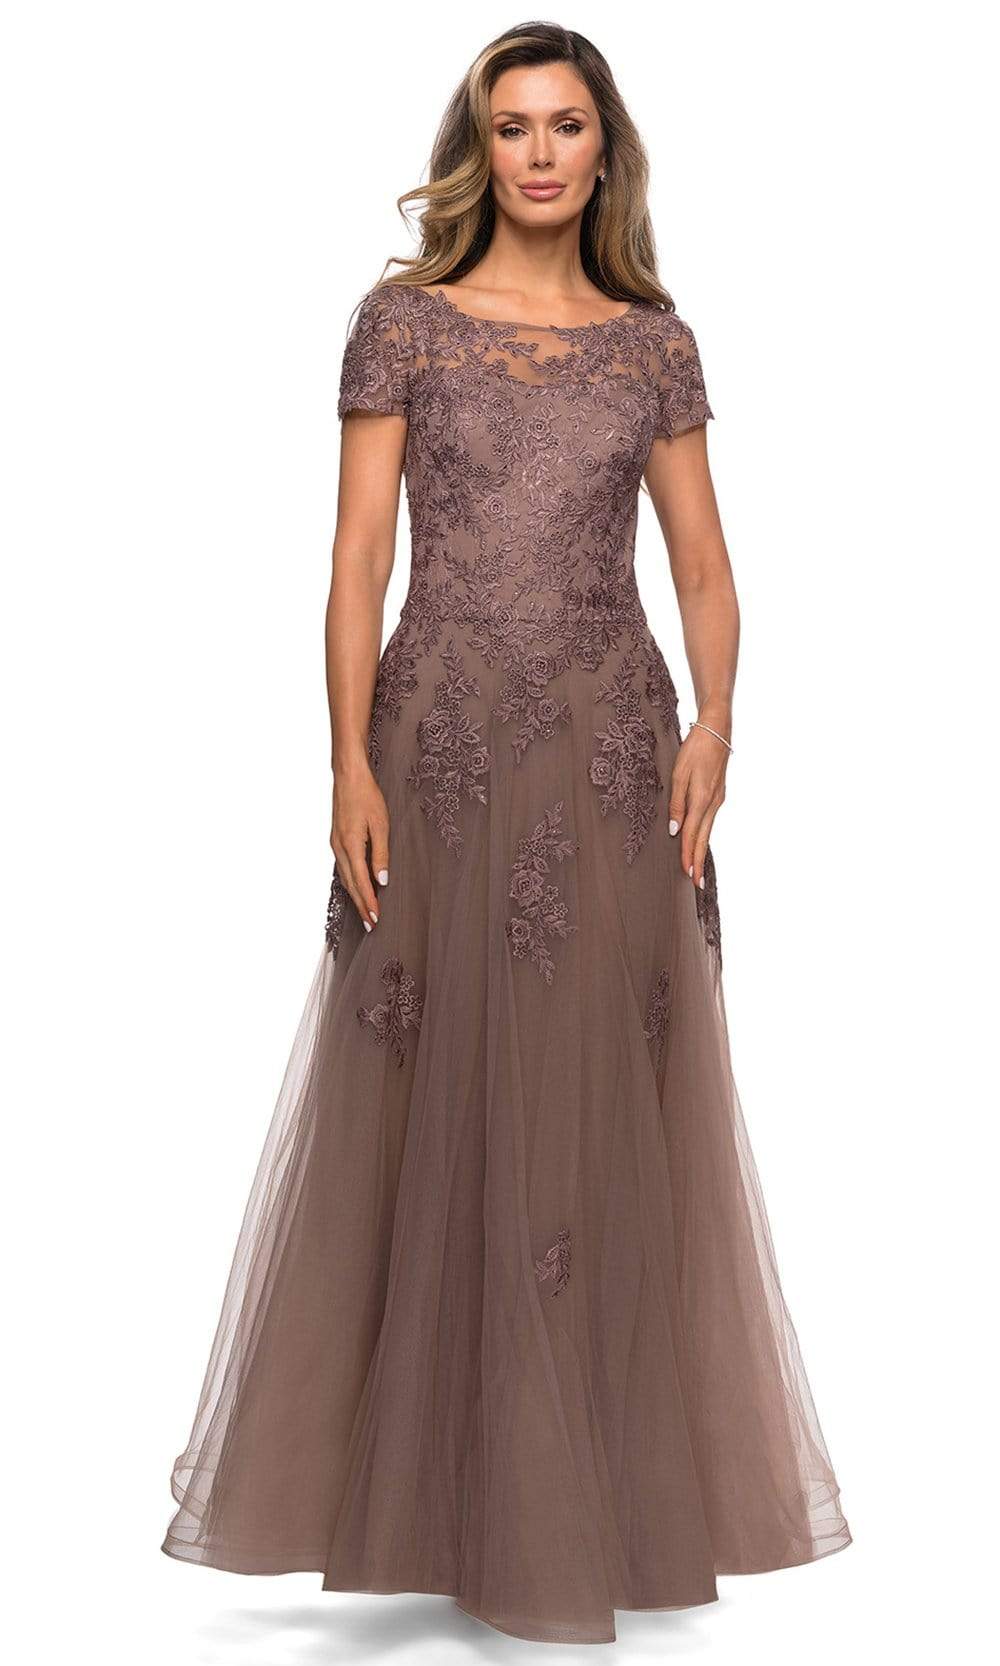 Image of La Femme - 27958 Embroidered Short Sleeve Tulle A-Line Dress